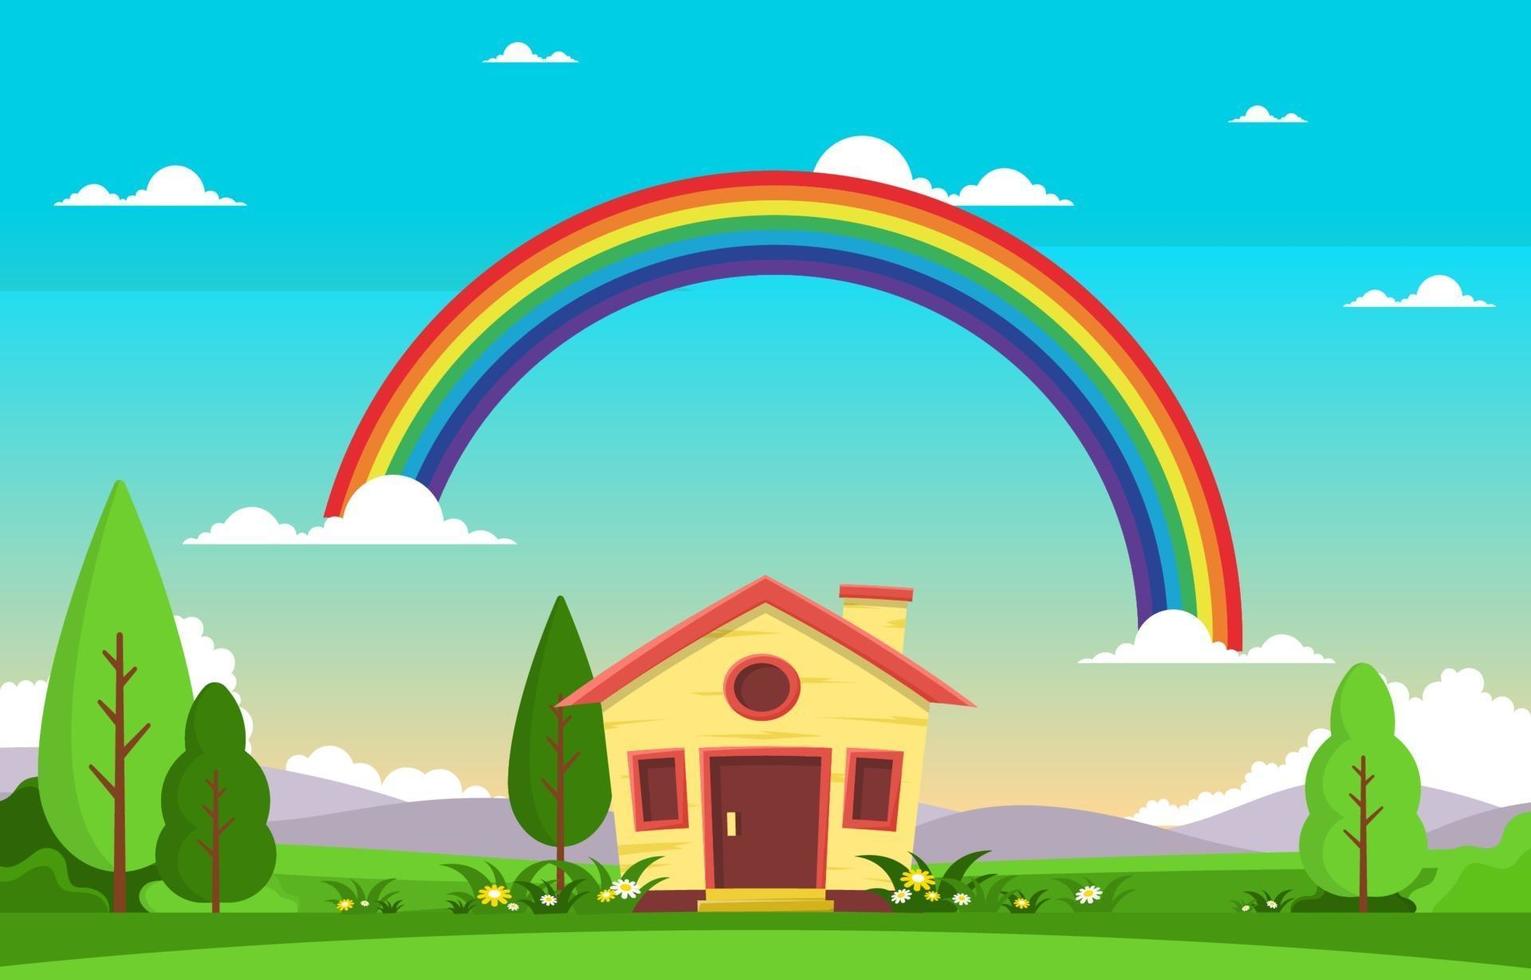 Little House with Rainbow Summer Nature Landscape Illustration vector